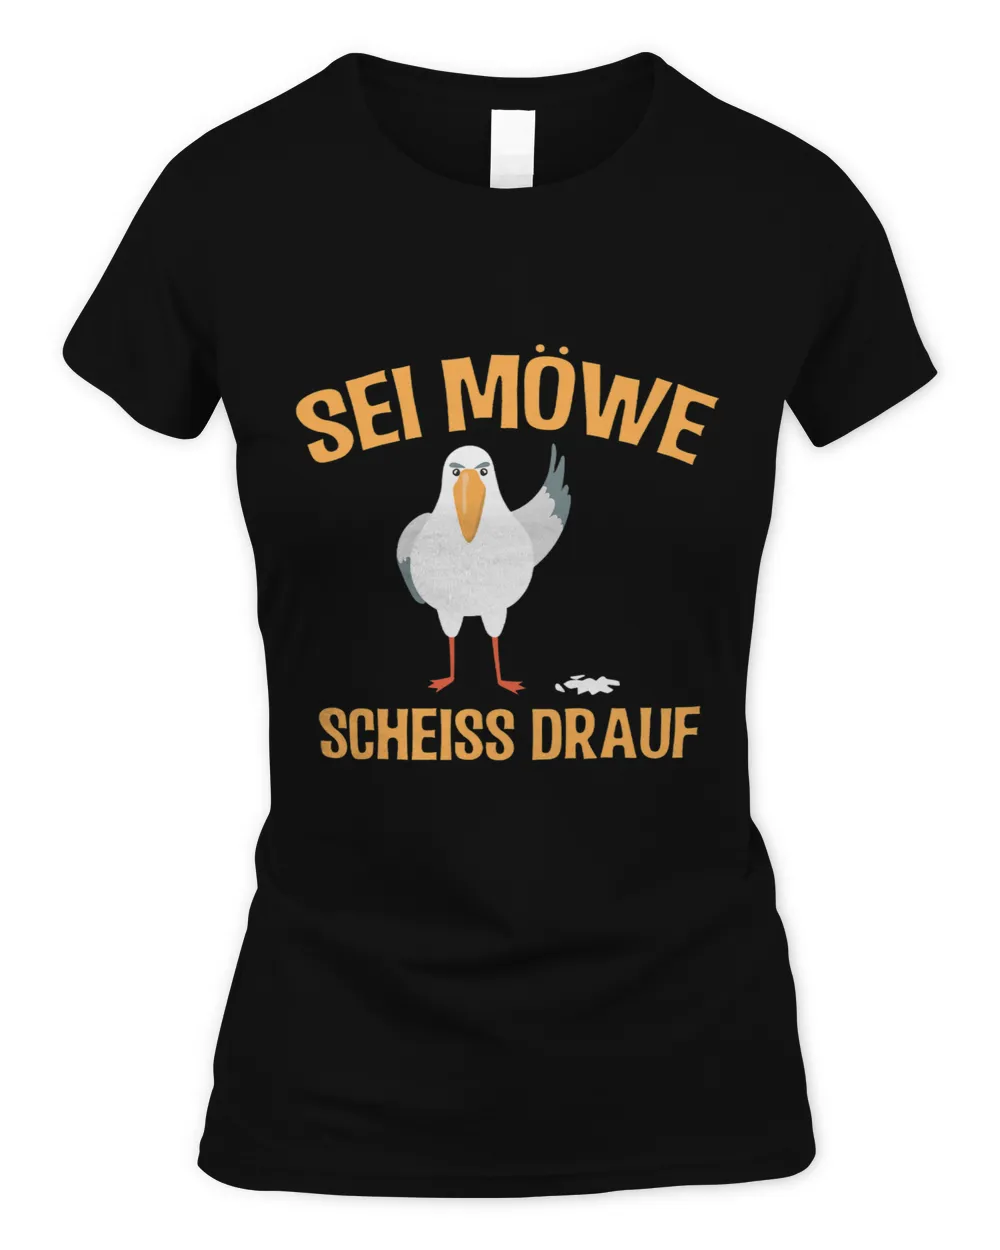 Sei Seagull Scheiss Drauf Ostsee North Sea Funny Saying